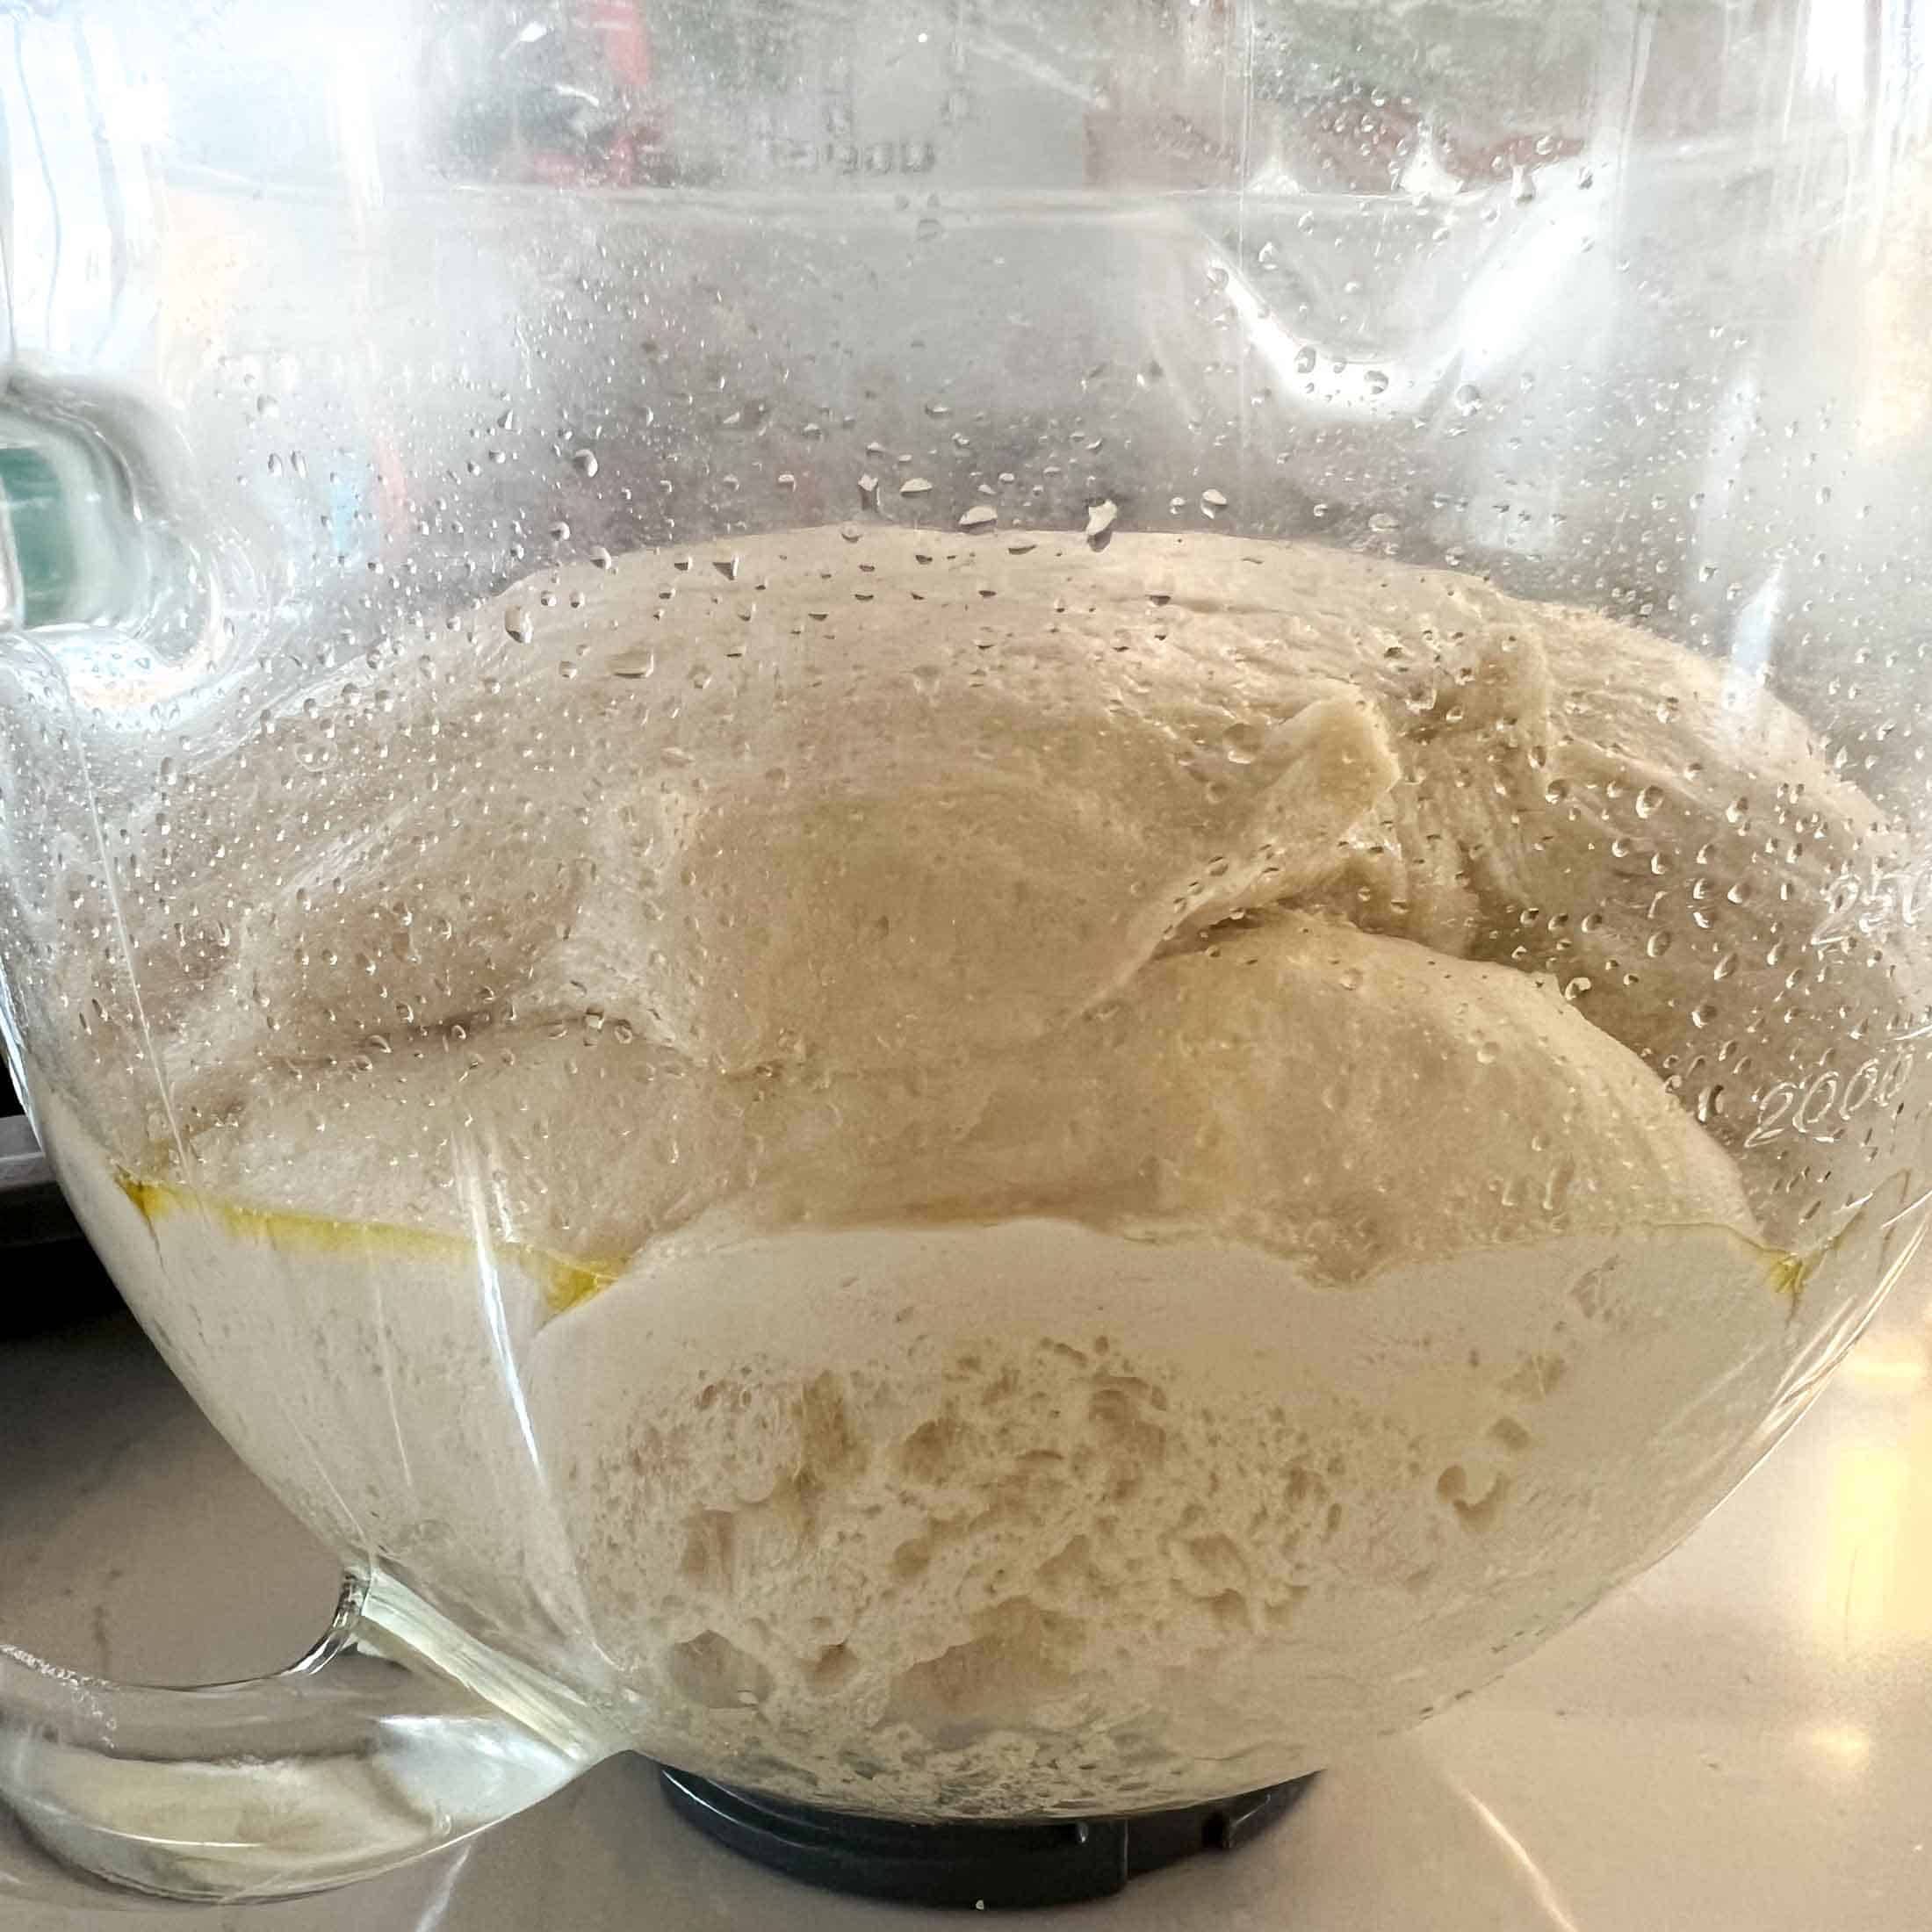 Sourdough bread risen in a glass kitchenaid mixer bowl.